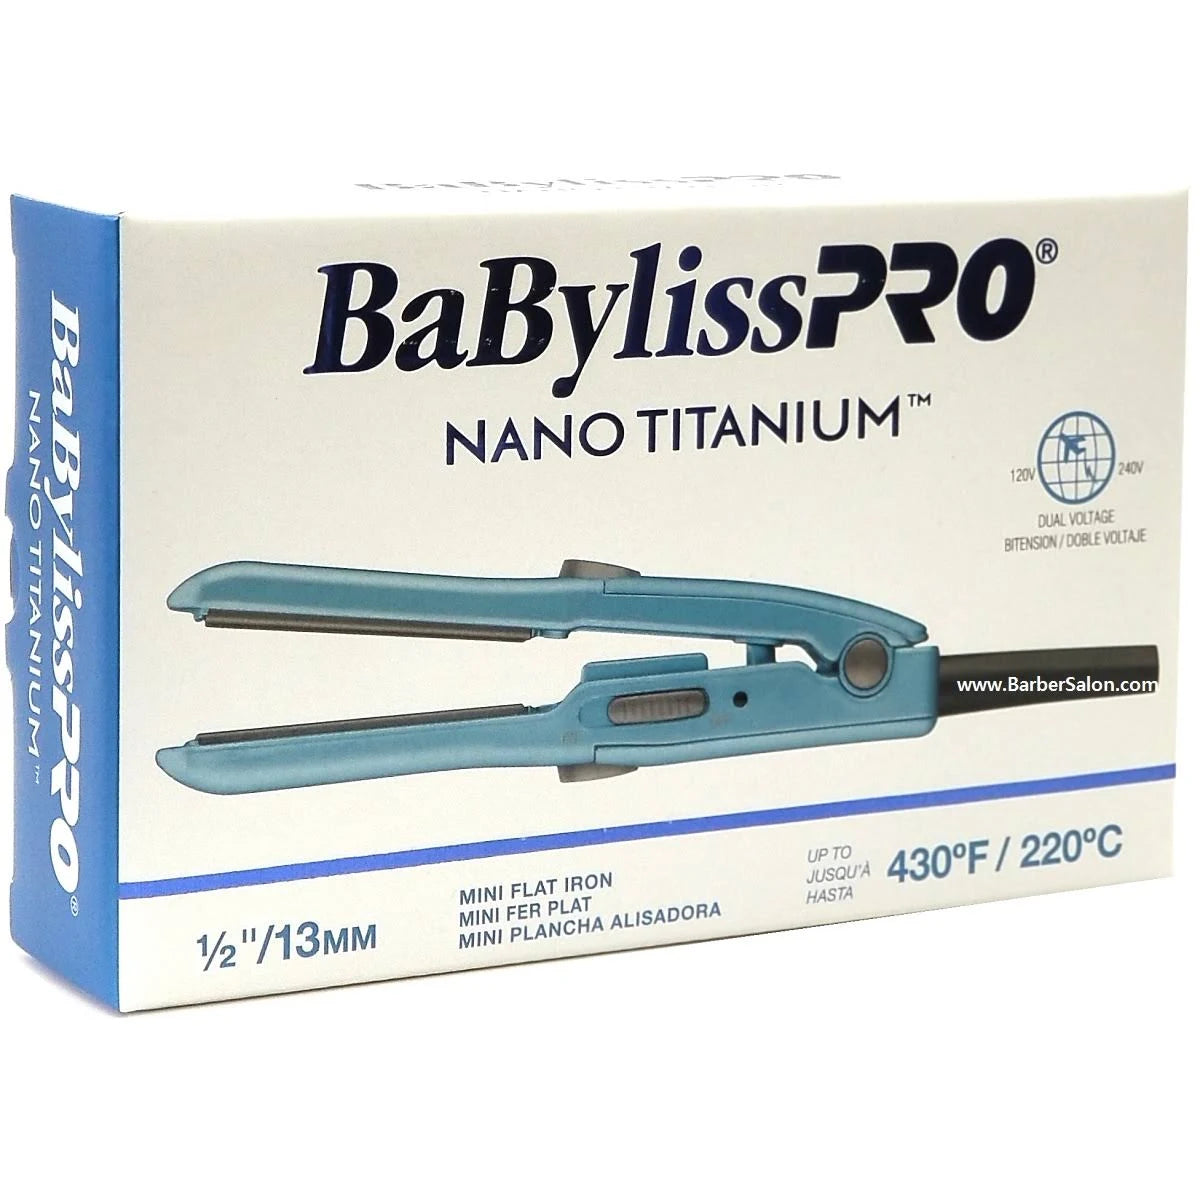 BaBylissPRO Nano Titanium Mini Flat Iron - 1/2